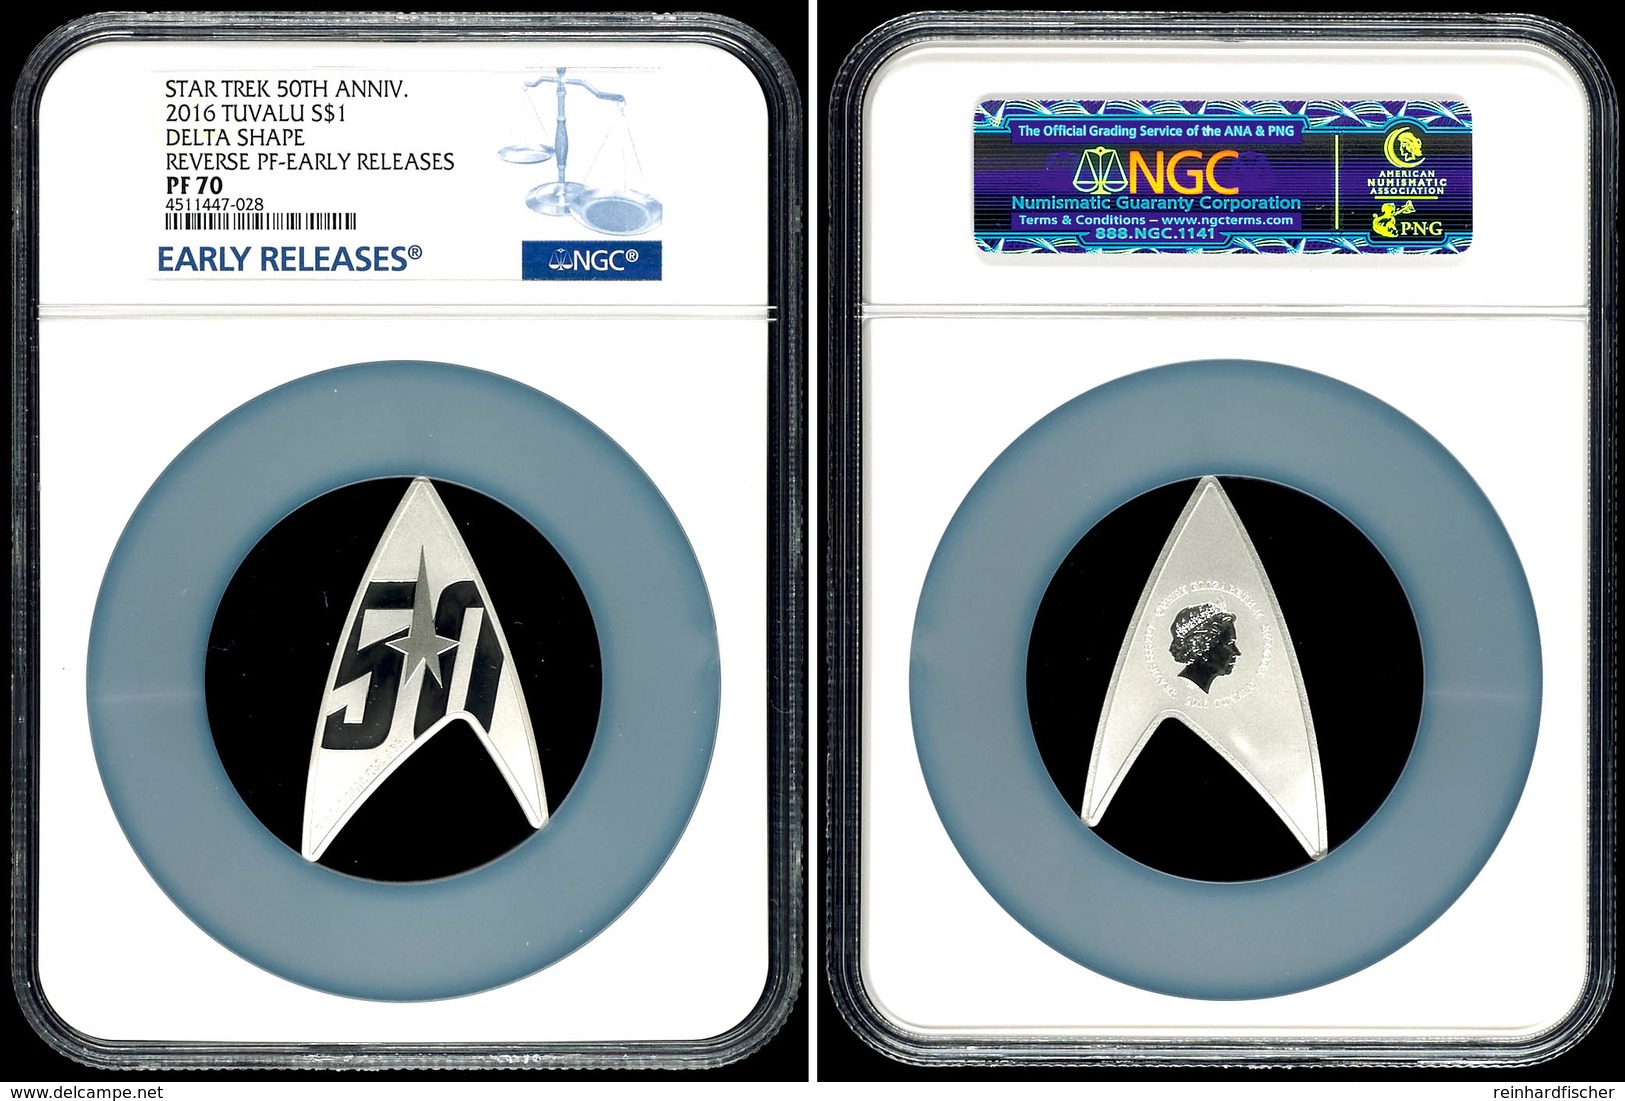 847 2 Dollars, 2016, Star Trek-Delta Shape, In Slab Der NGC Mit Der Bewertung PF70, Reverse Proof, Early Releases. - Tuvalu